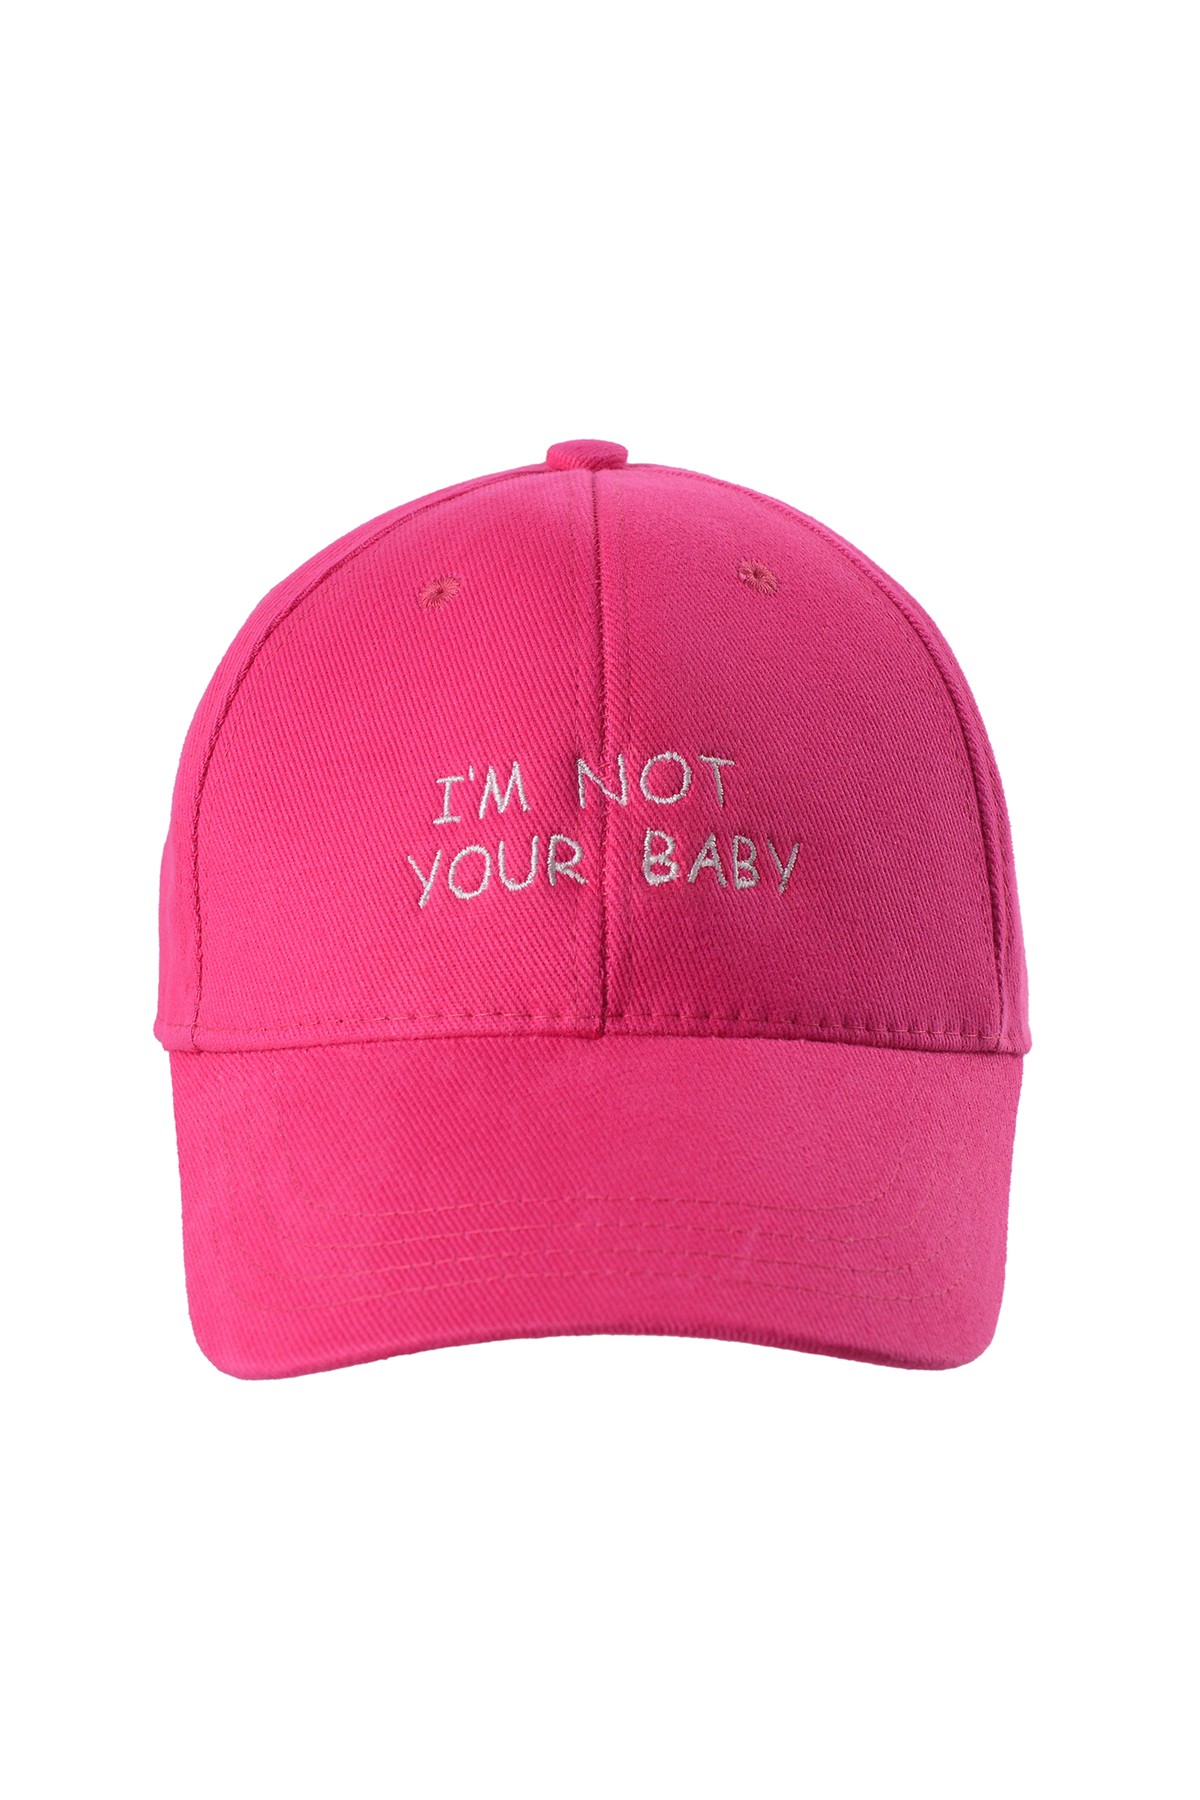 I'M NOT YOUR BABY CAP